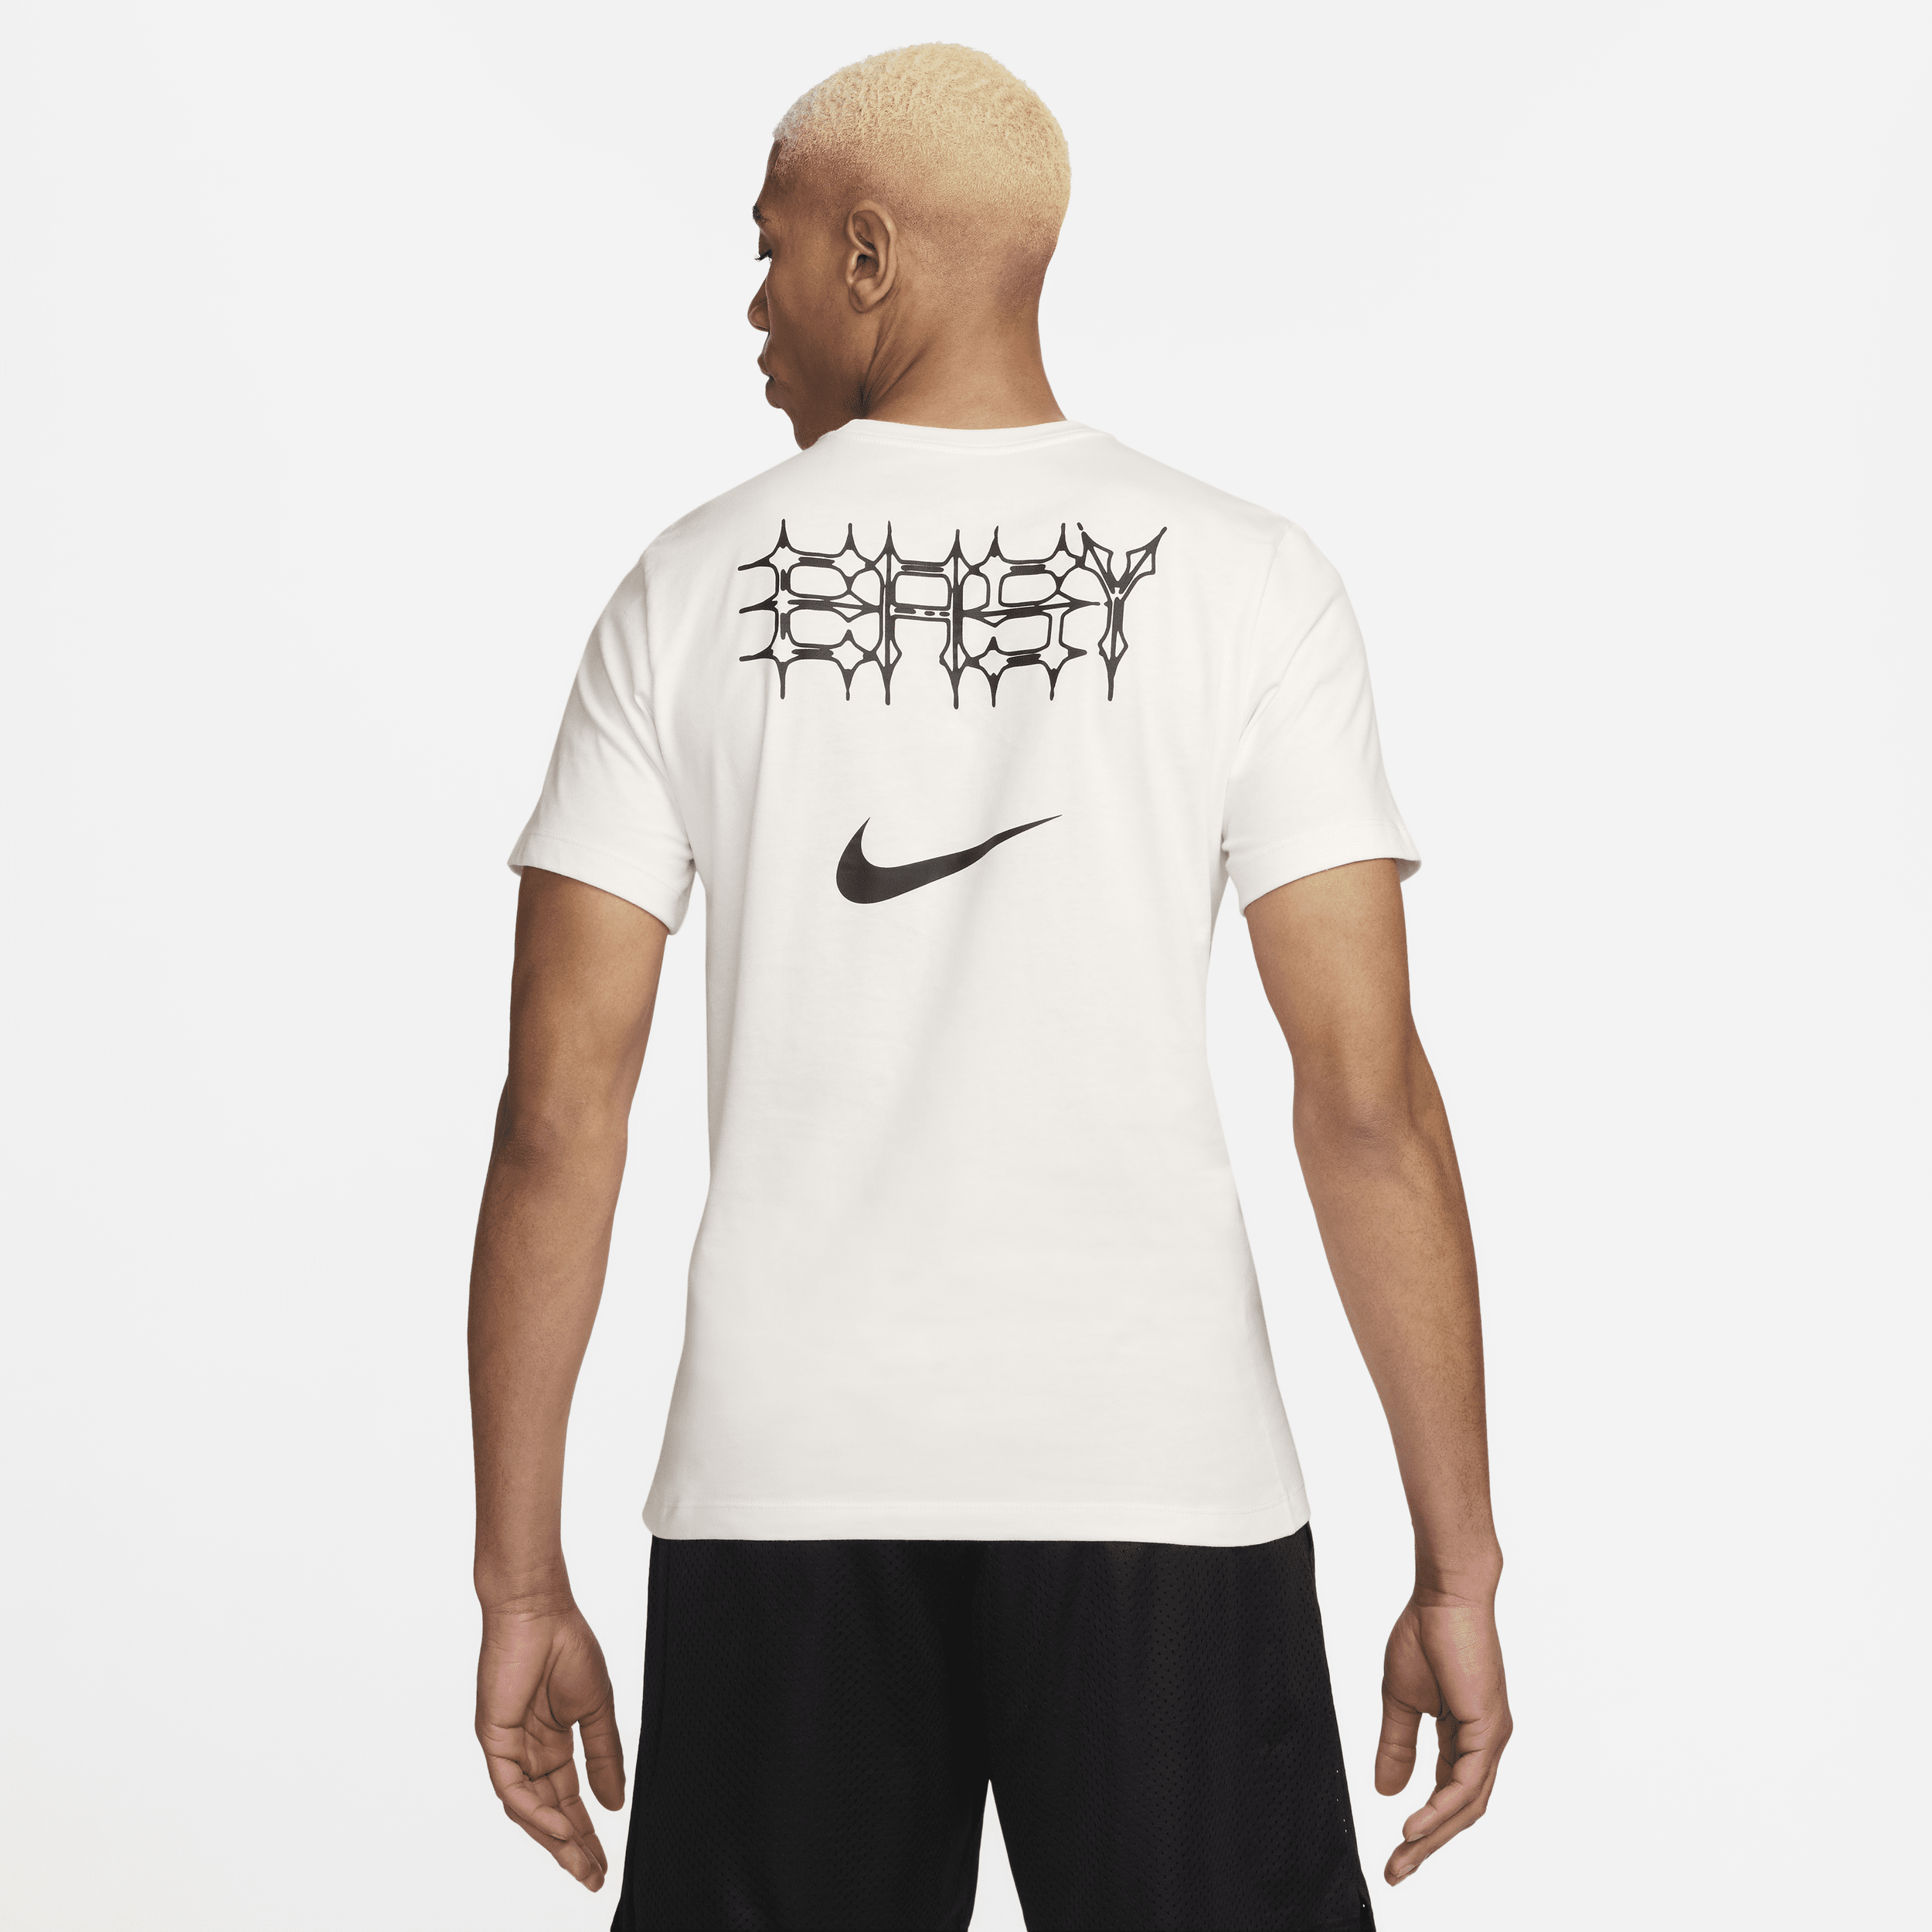 Nike Kevin Durant basketbalshirt voor heren Wit